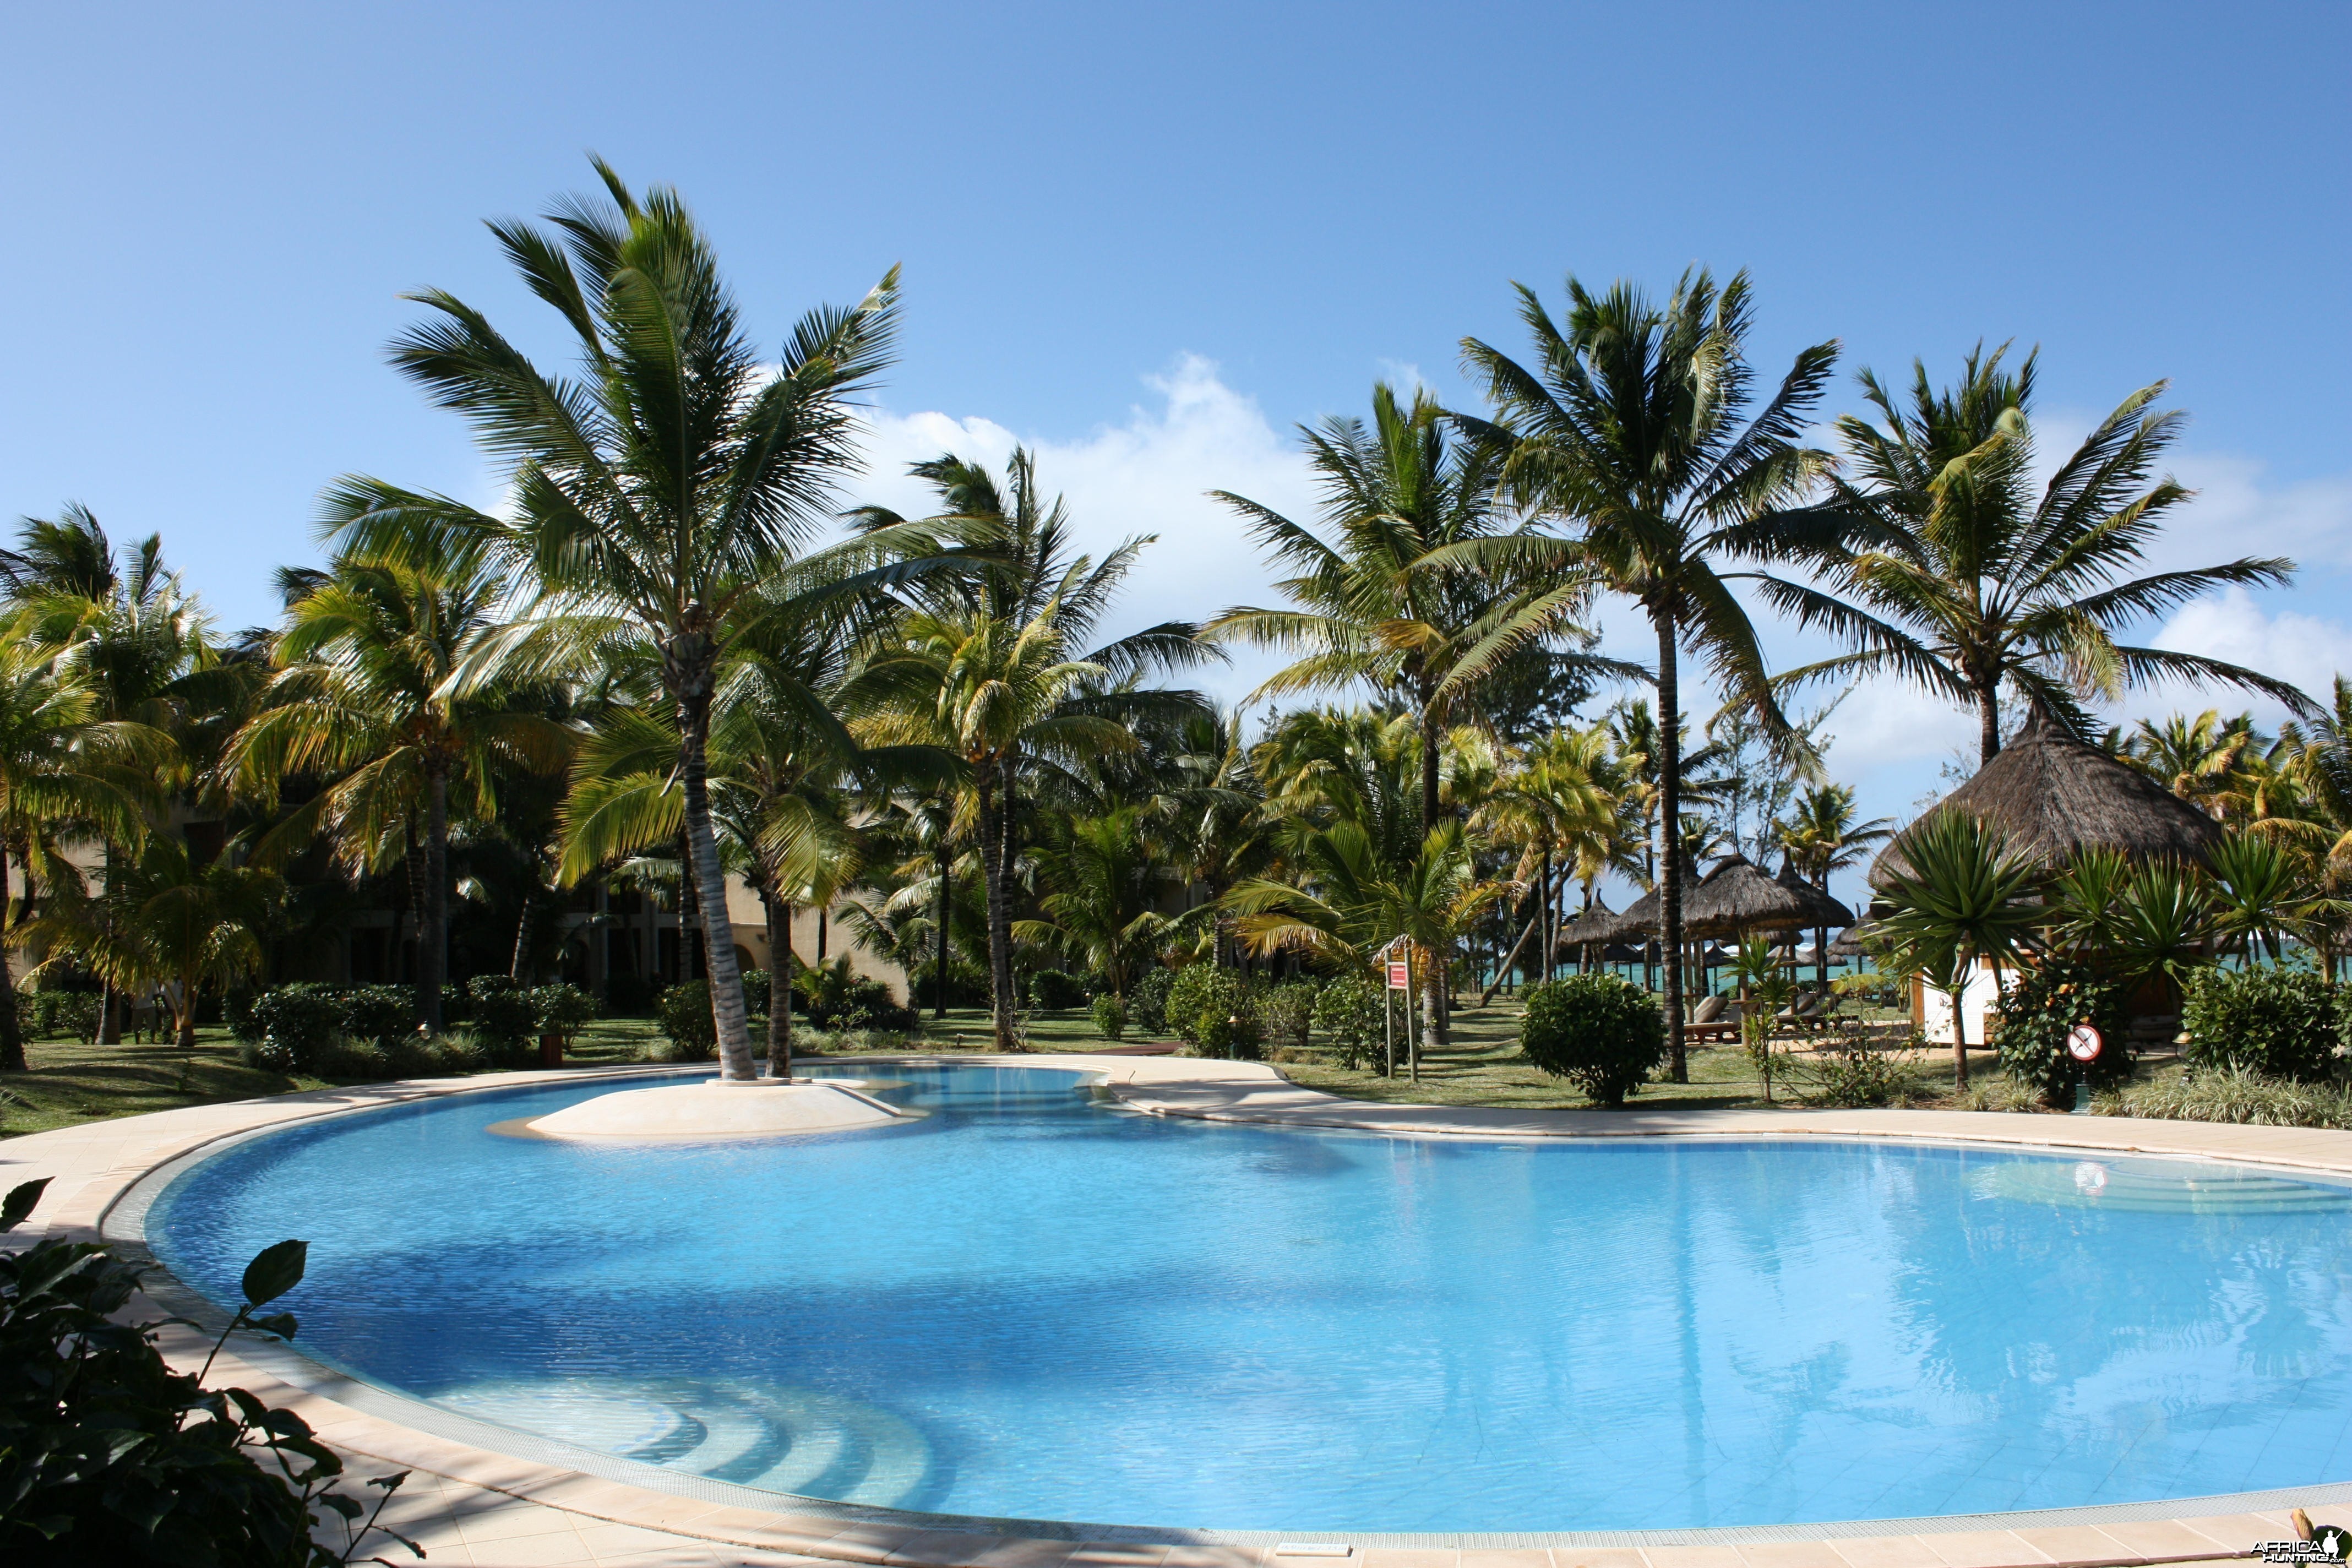 Moevenpick Resort in Mauritius